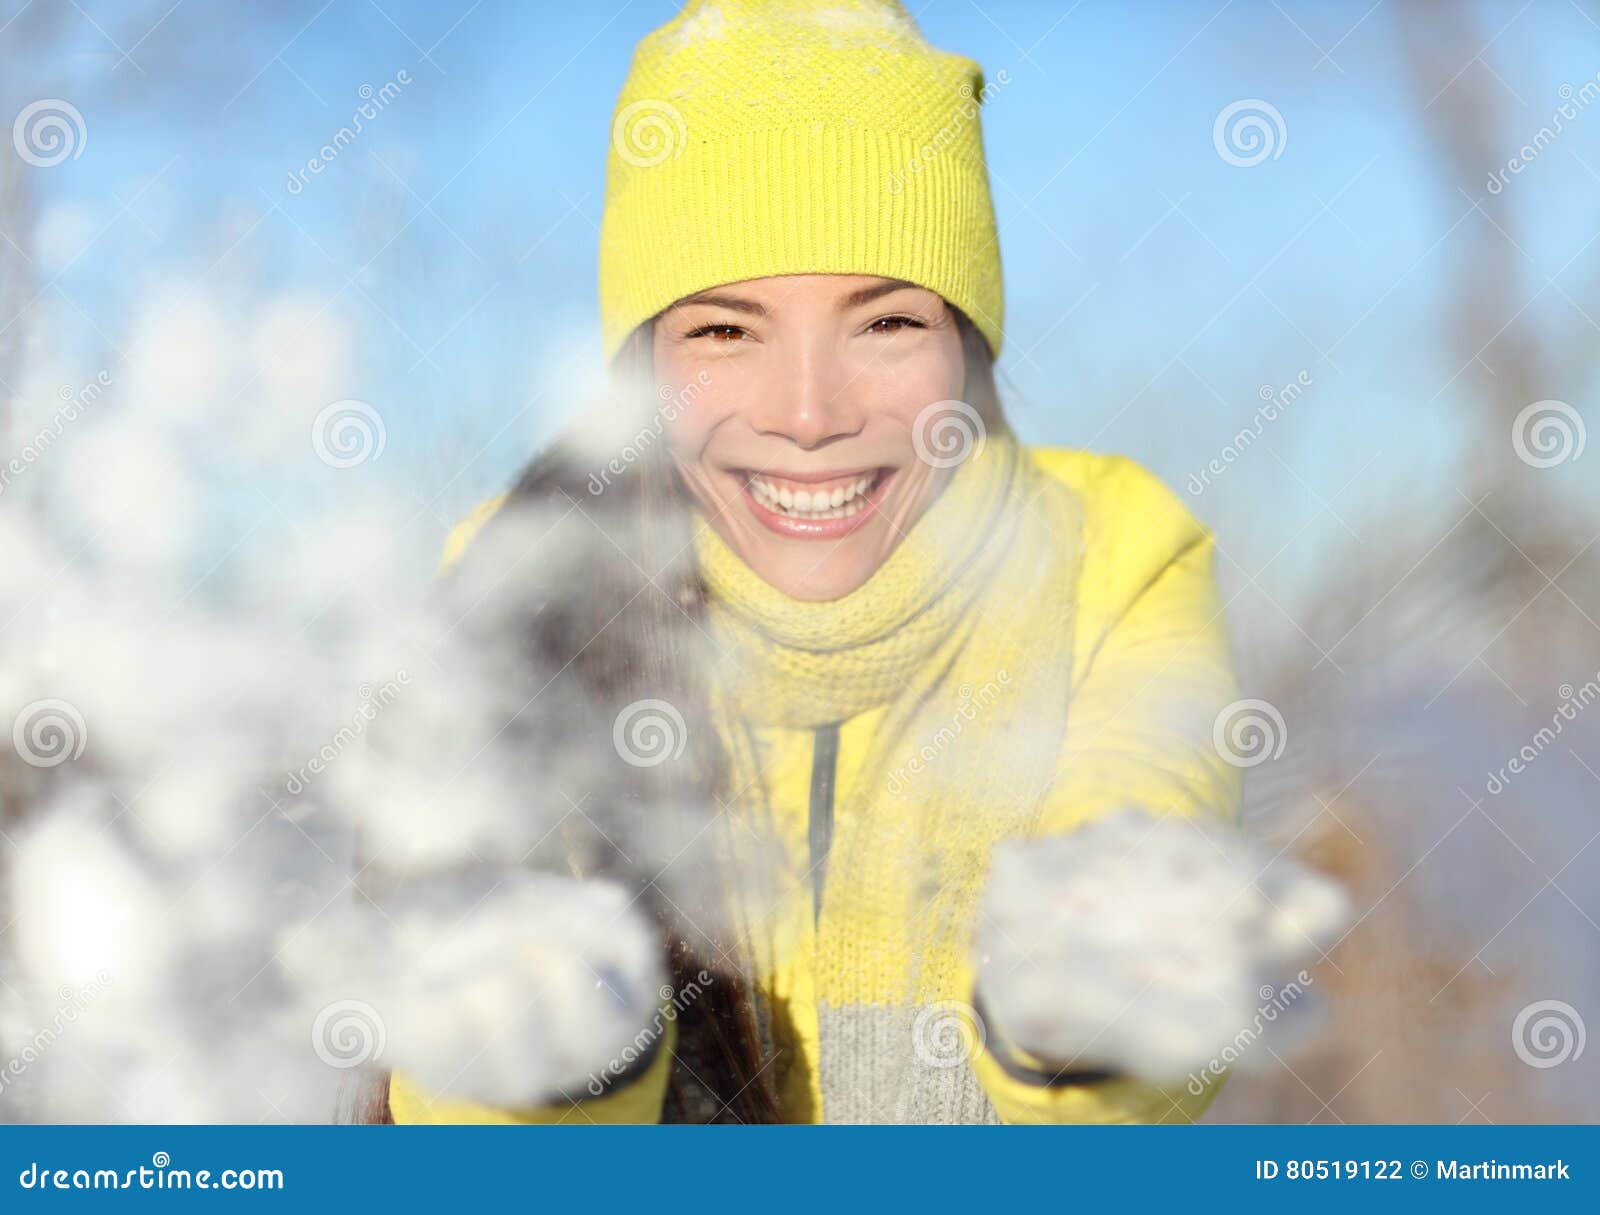 snowball pic interracial